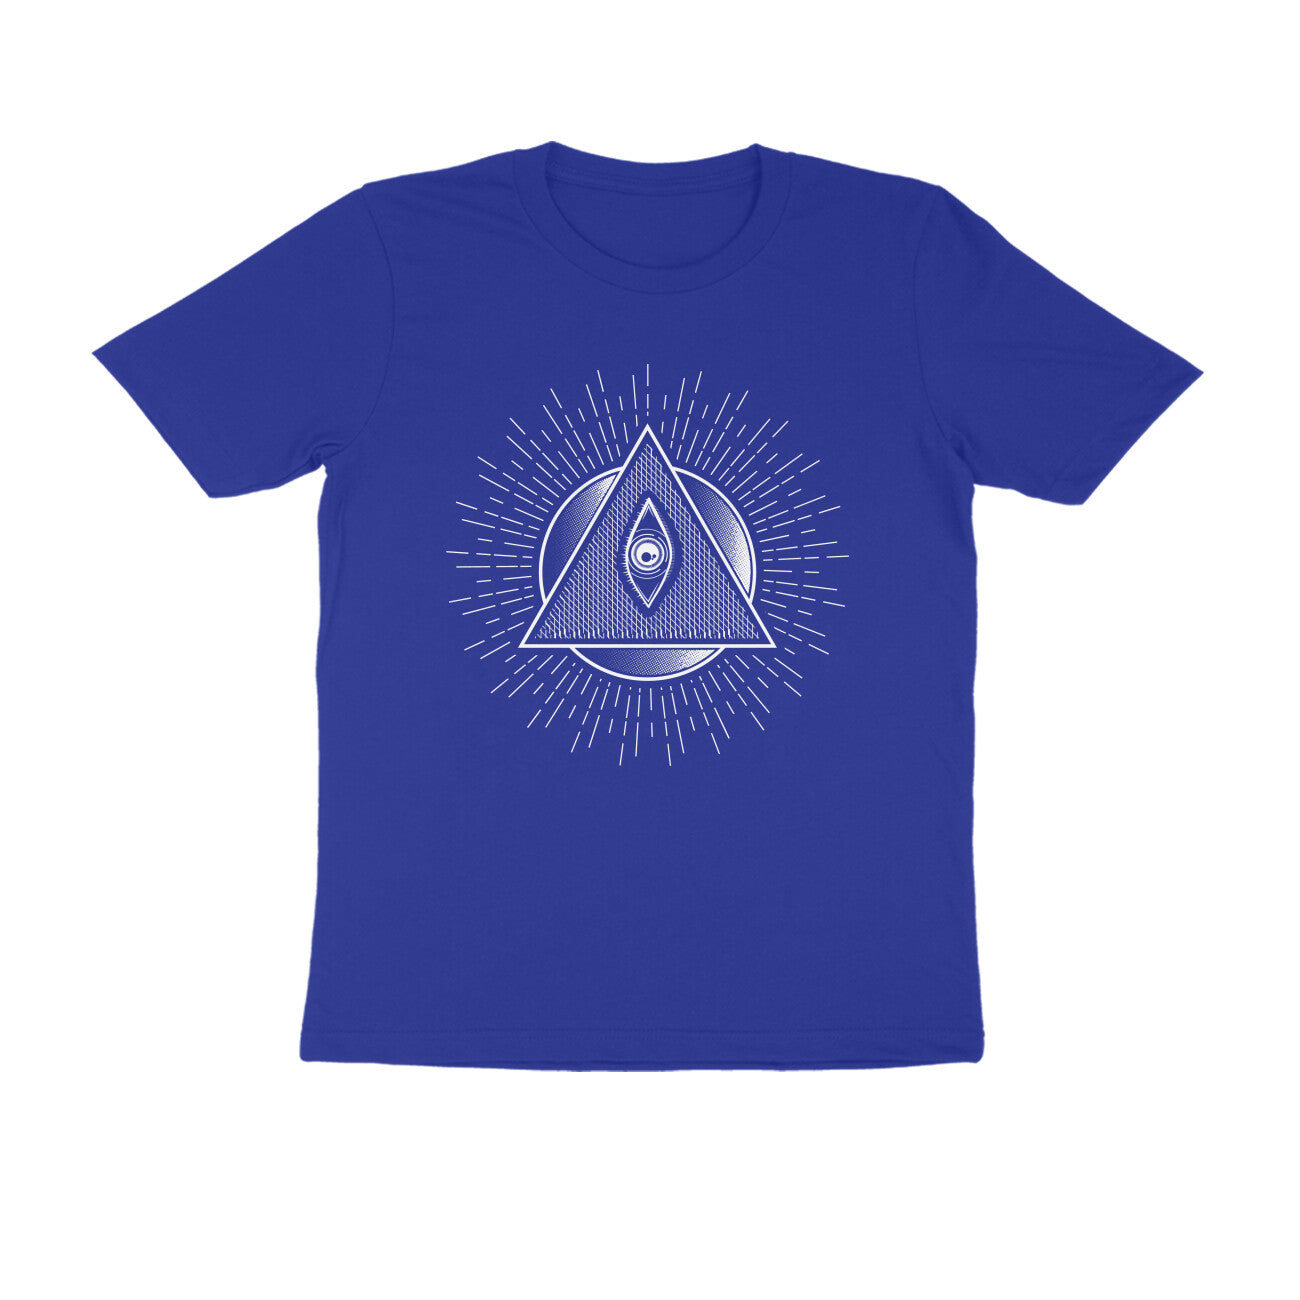 Black Gothic Mystic T-shirt Design With All Seeing Eye - Men's Half Sleeve T-Shirt